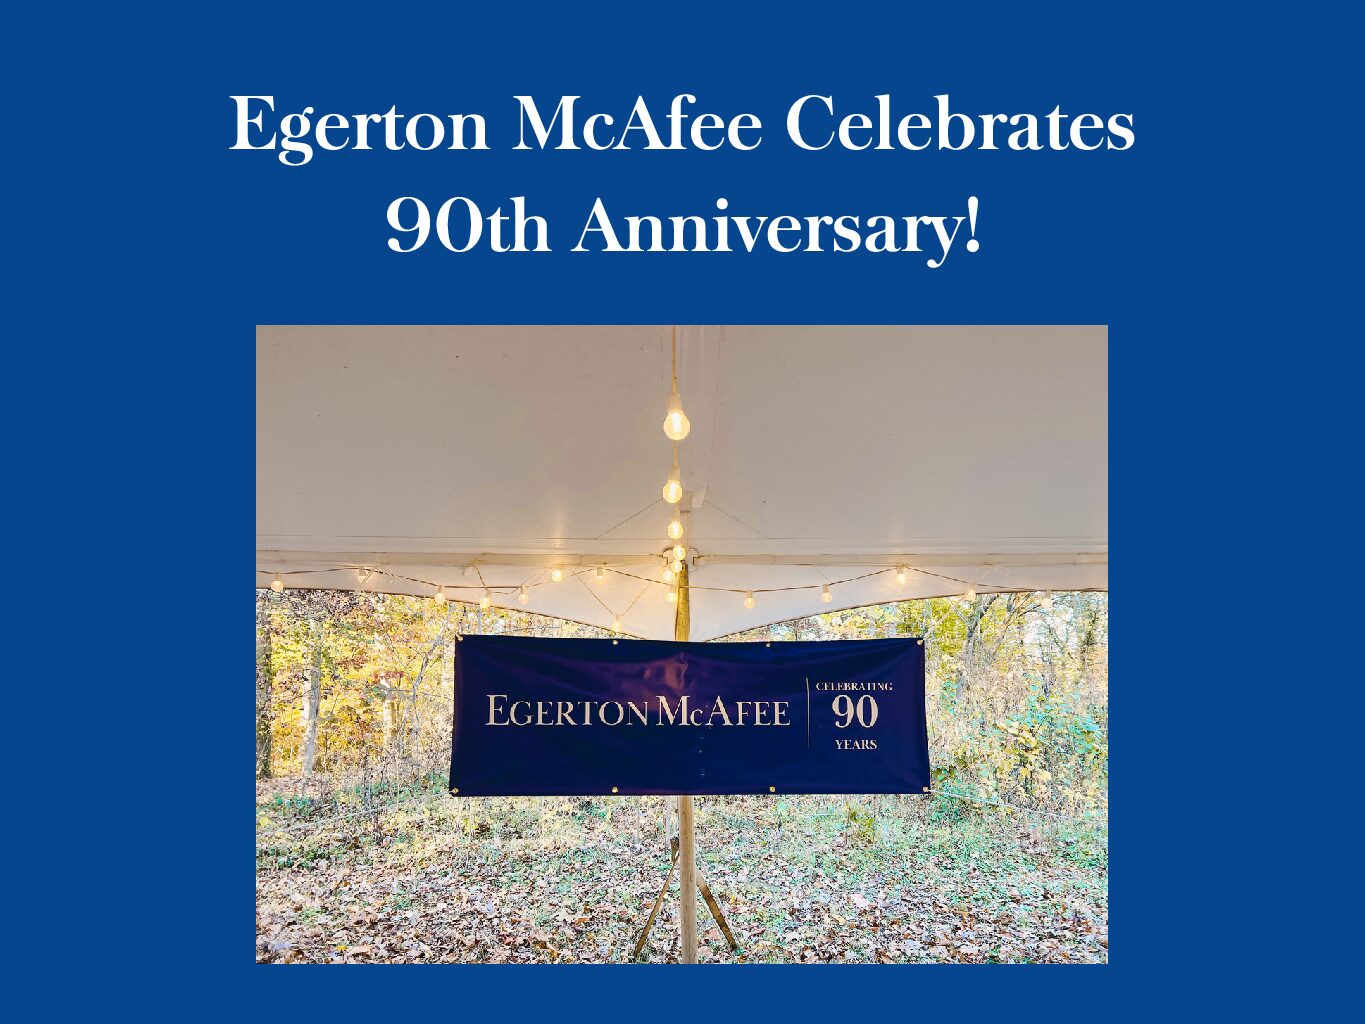 Egerton McAfee Celebrates 90th Anniversary